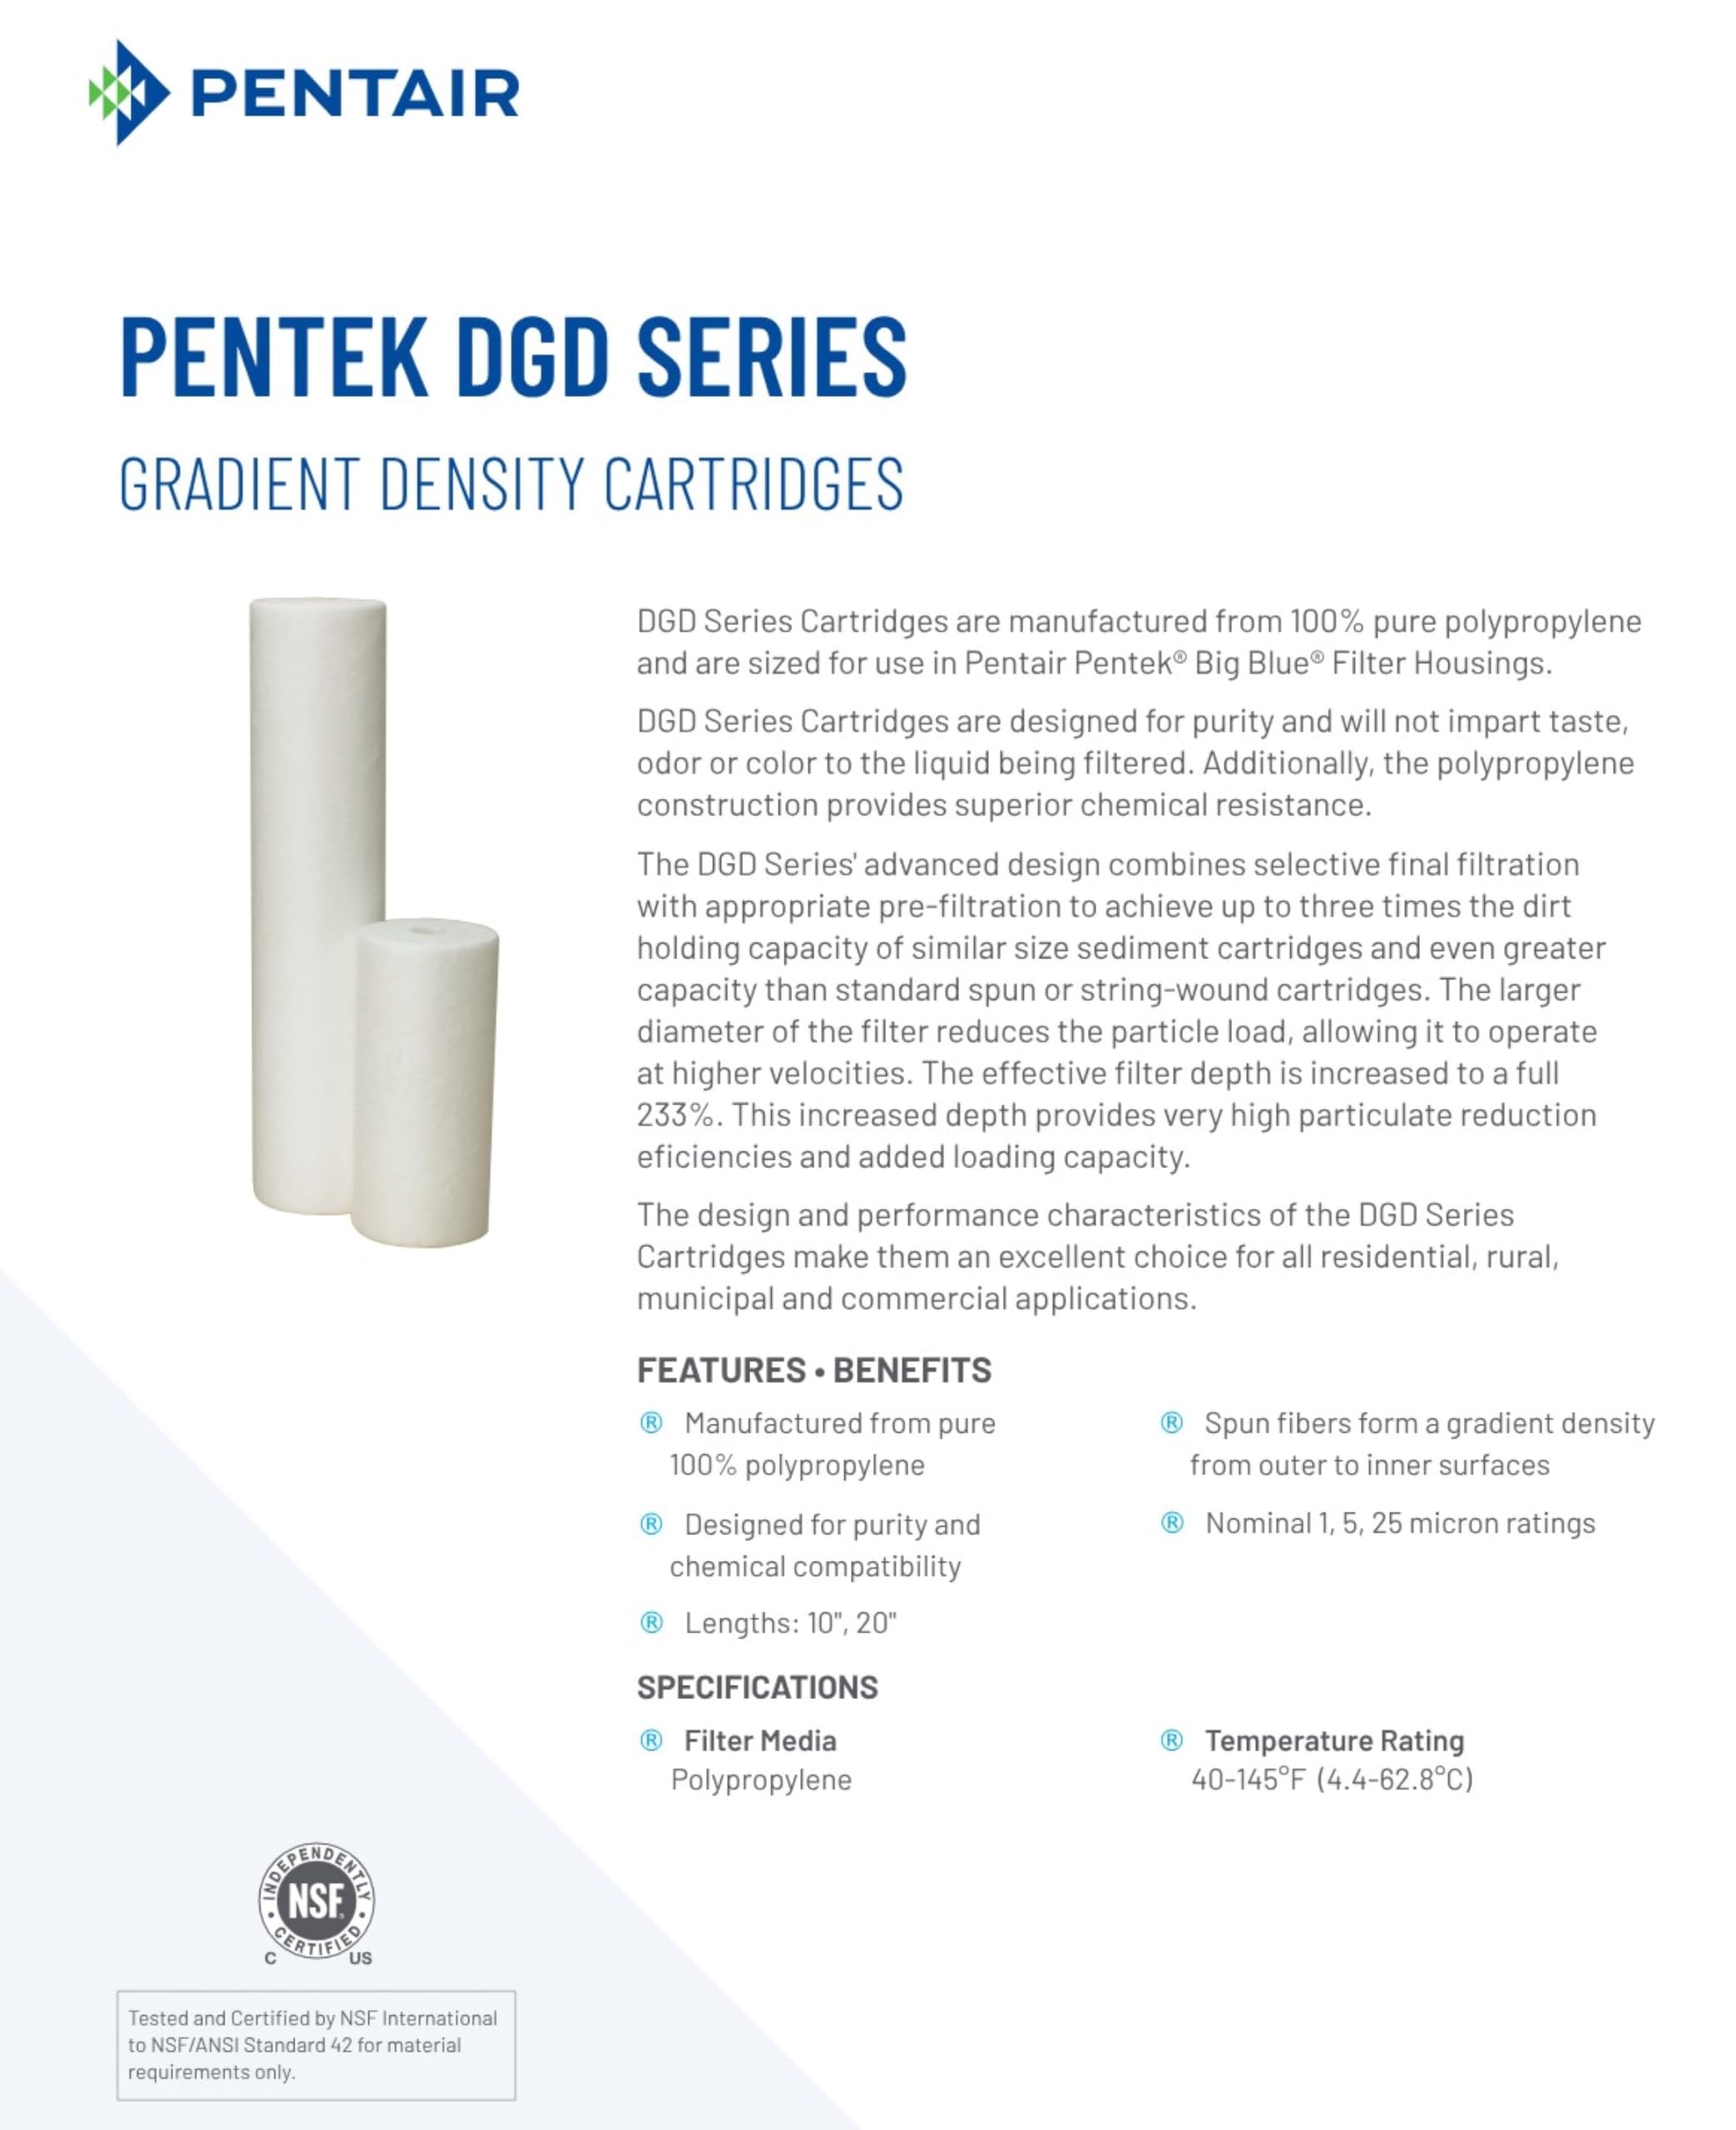 Pentair Pentek DGD-2501-20 Big Blue Water Filter, 20-Inch Whole House Sediment Filter Cartridge Replacement, Dual-Gradient Density Spun Polypropylene, 20